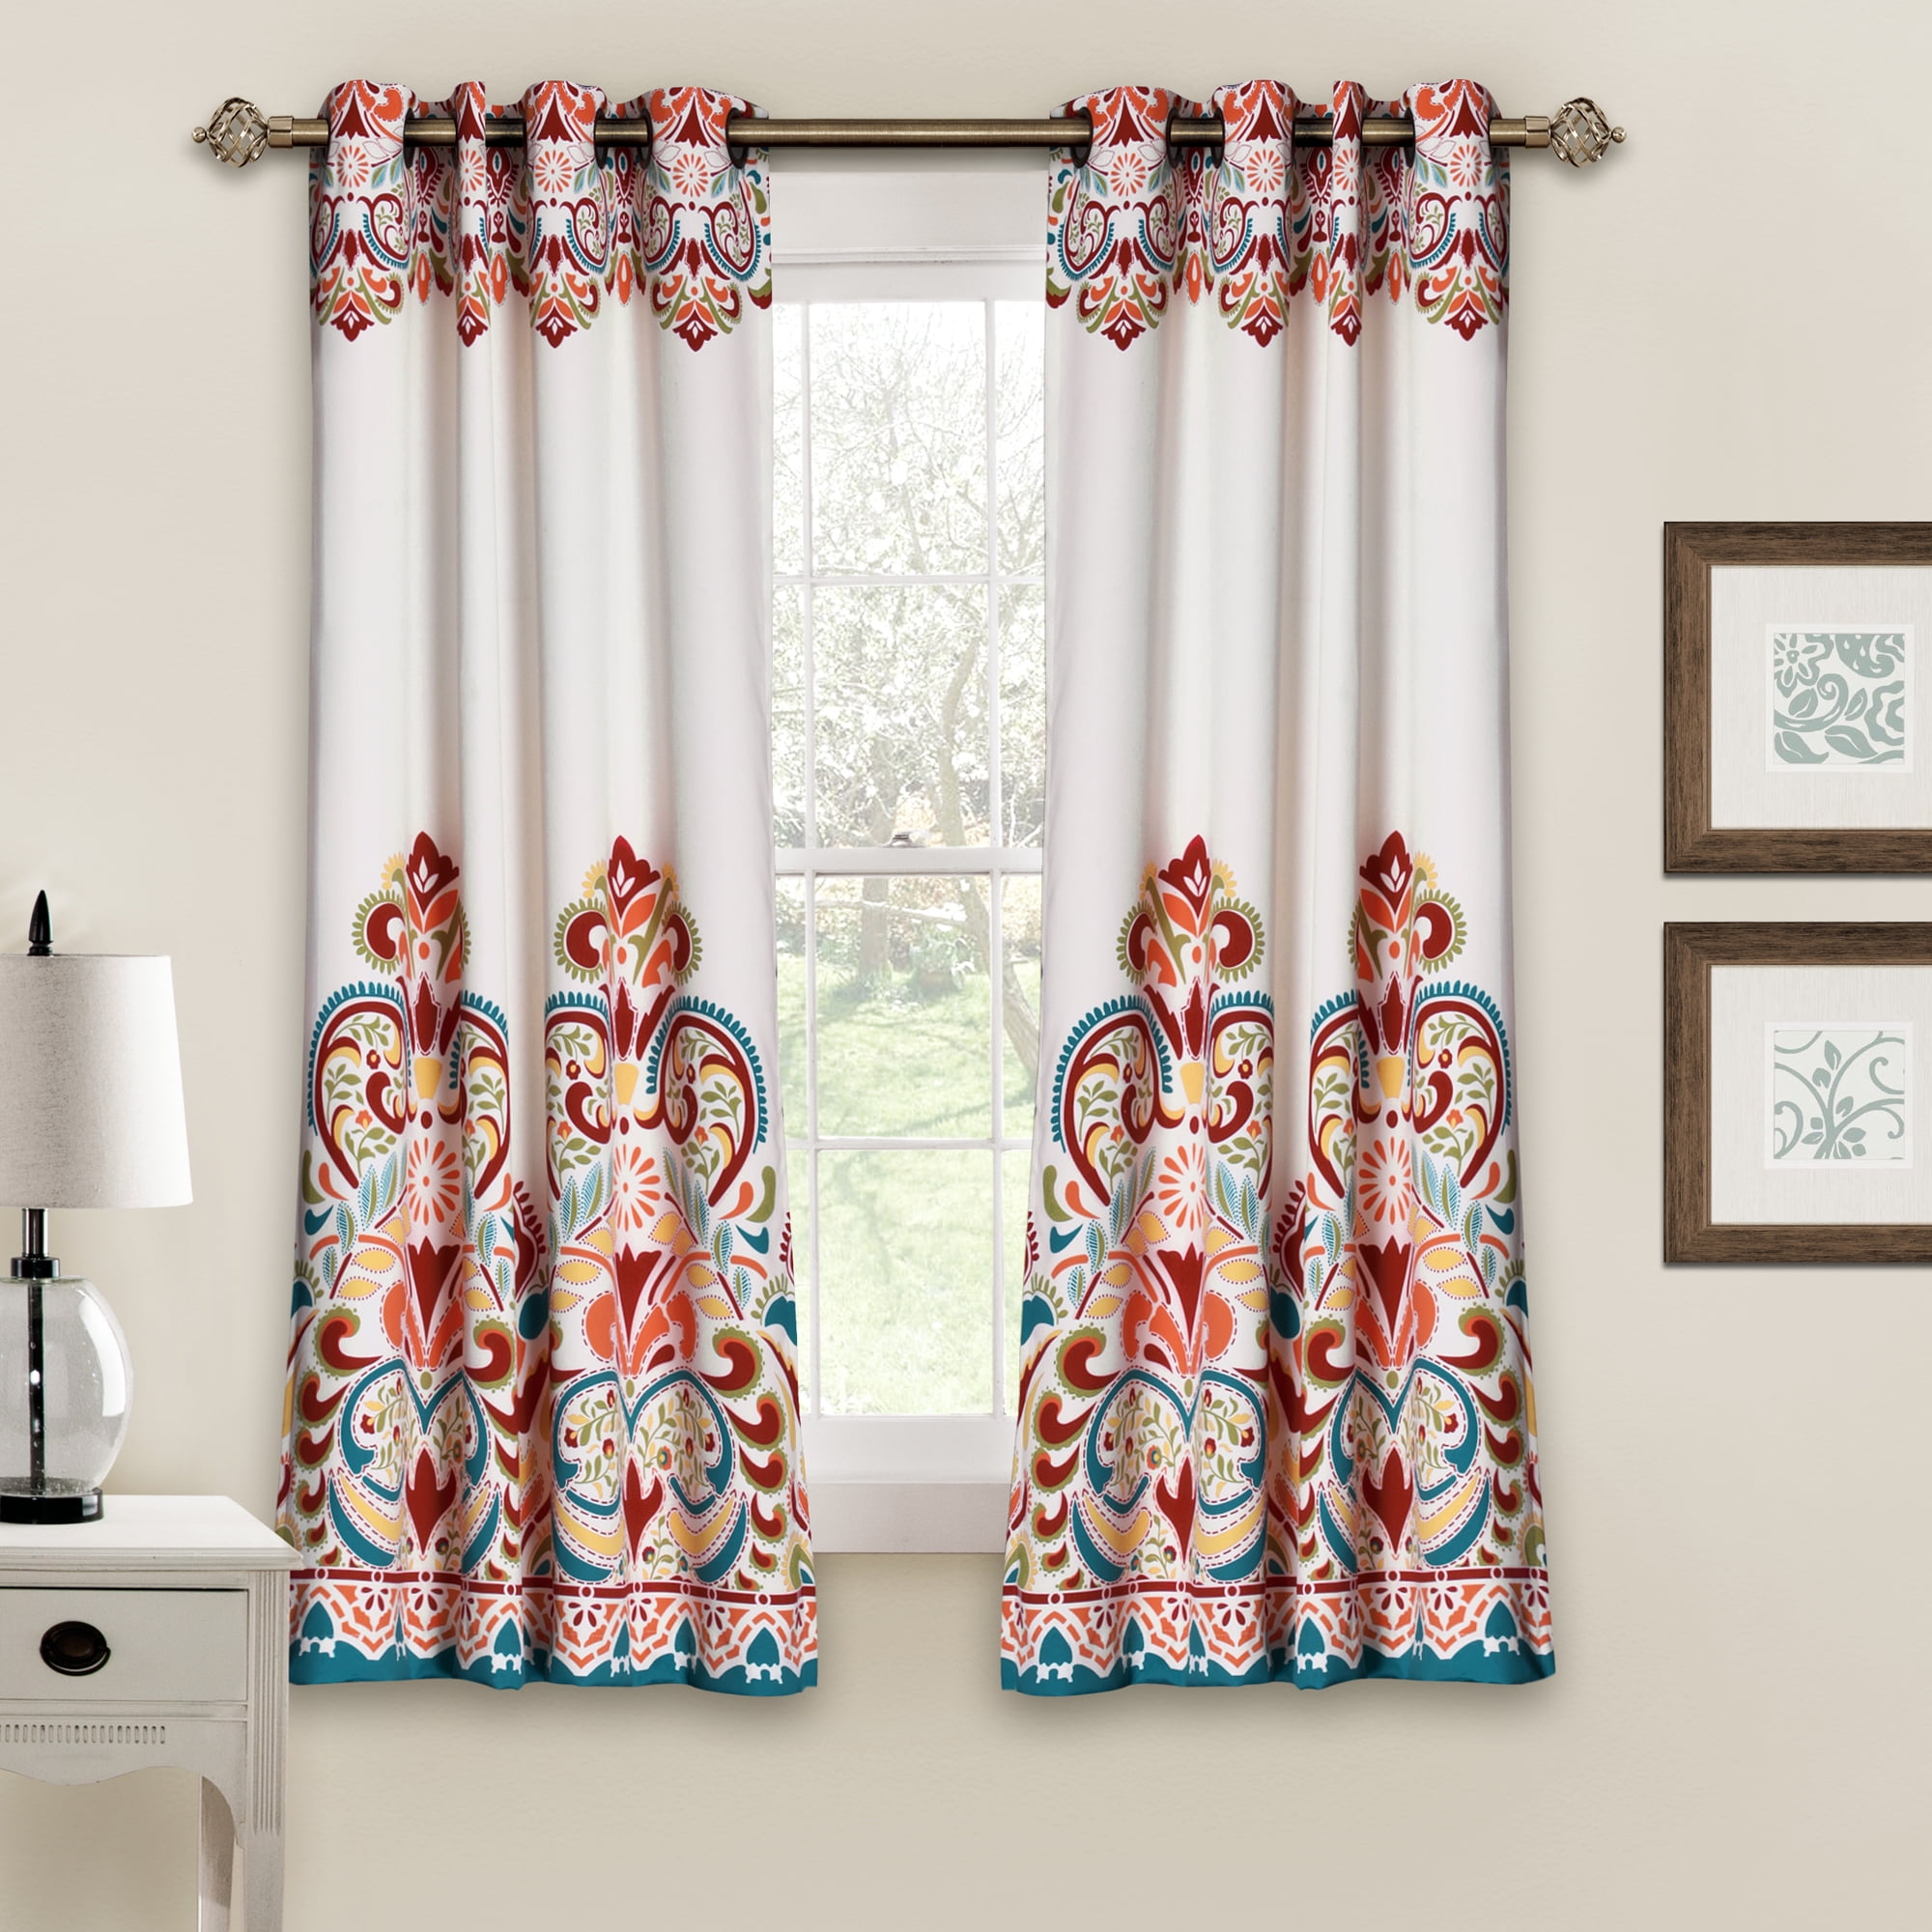 Details about   11 Colors Modern Boho Printed Curtains Home Decor Bedroom Blackout Windows Drape 